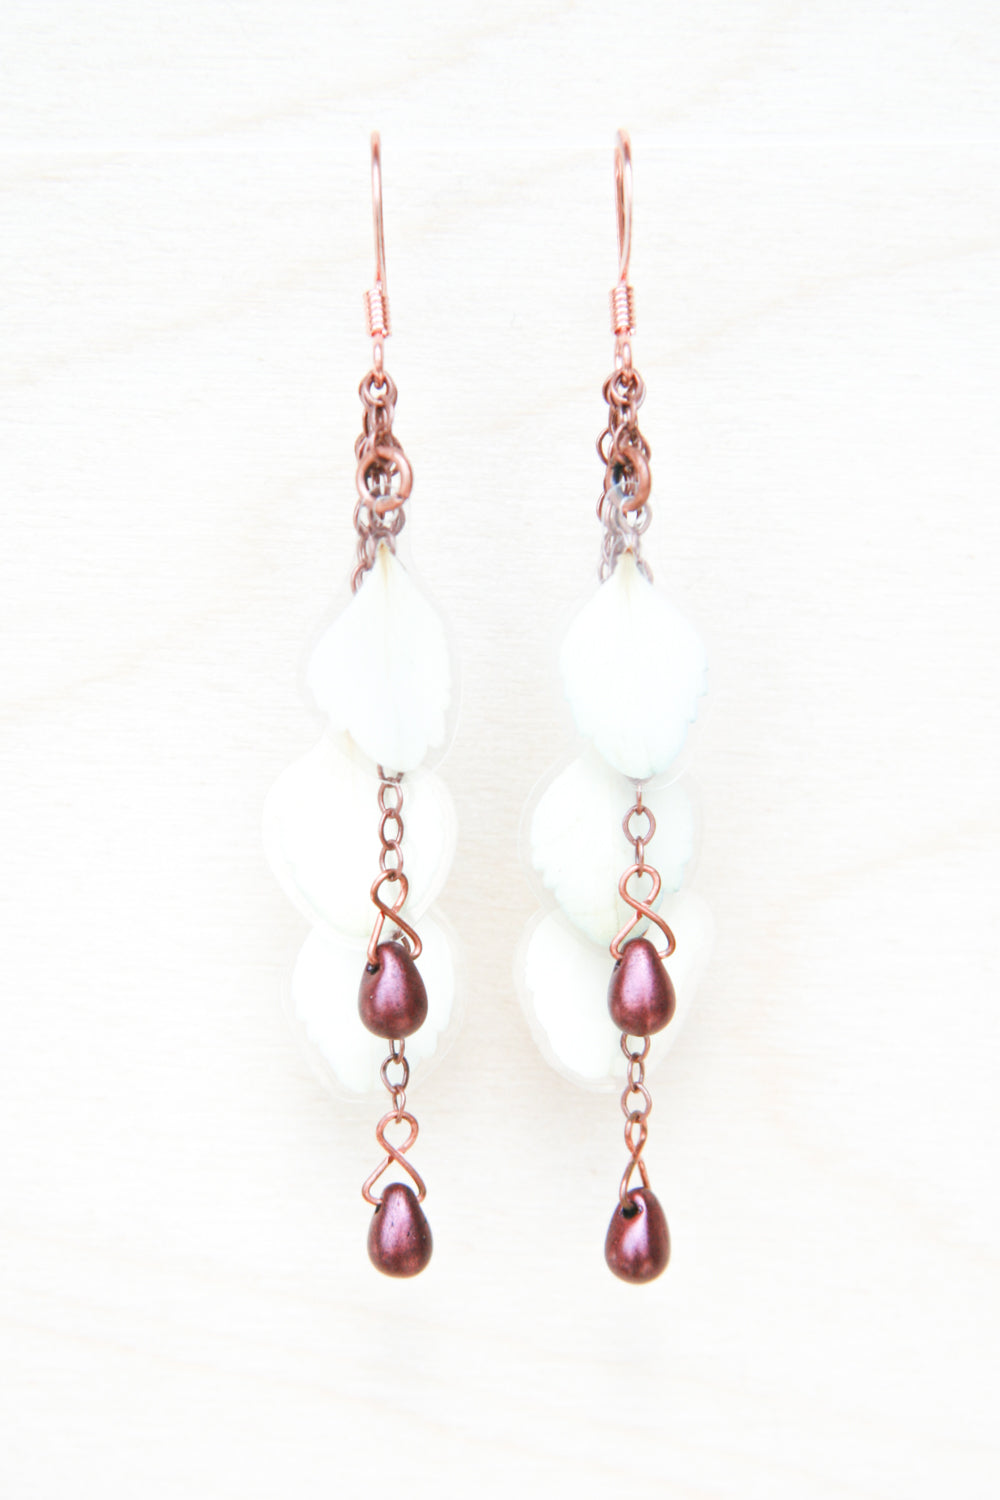 White Hydrangea Pressed Petal Earrings with Cranberry Teardrop Glass Beads